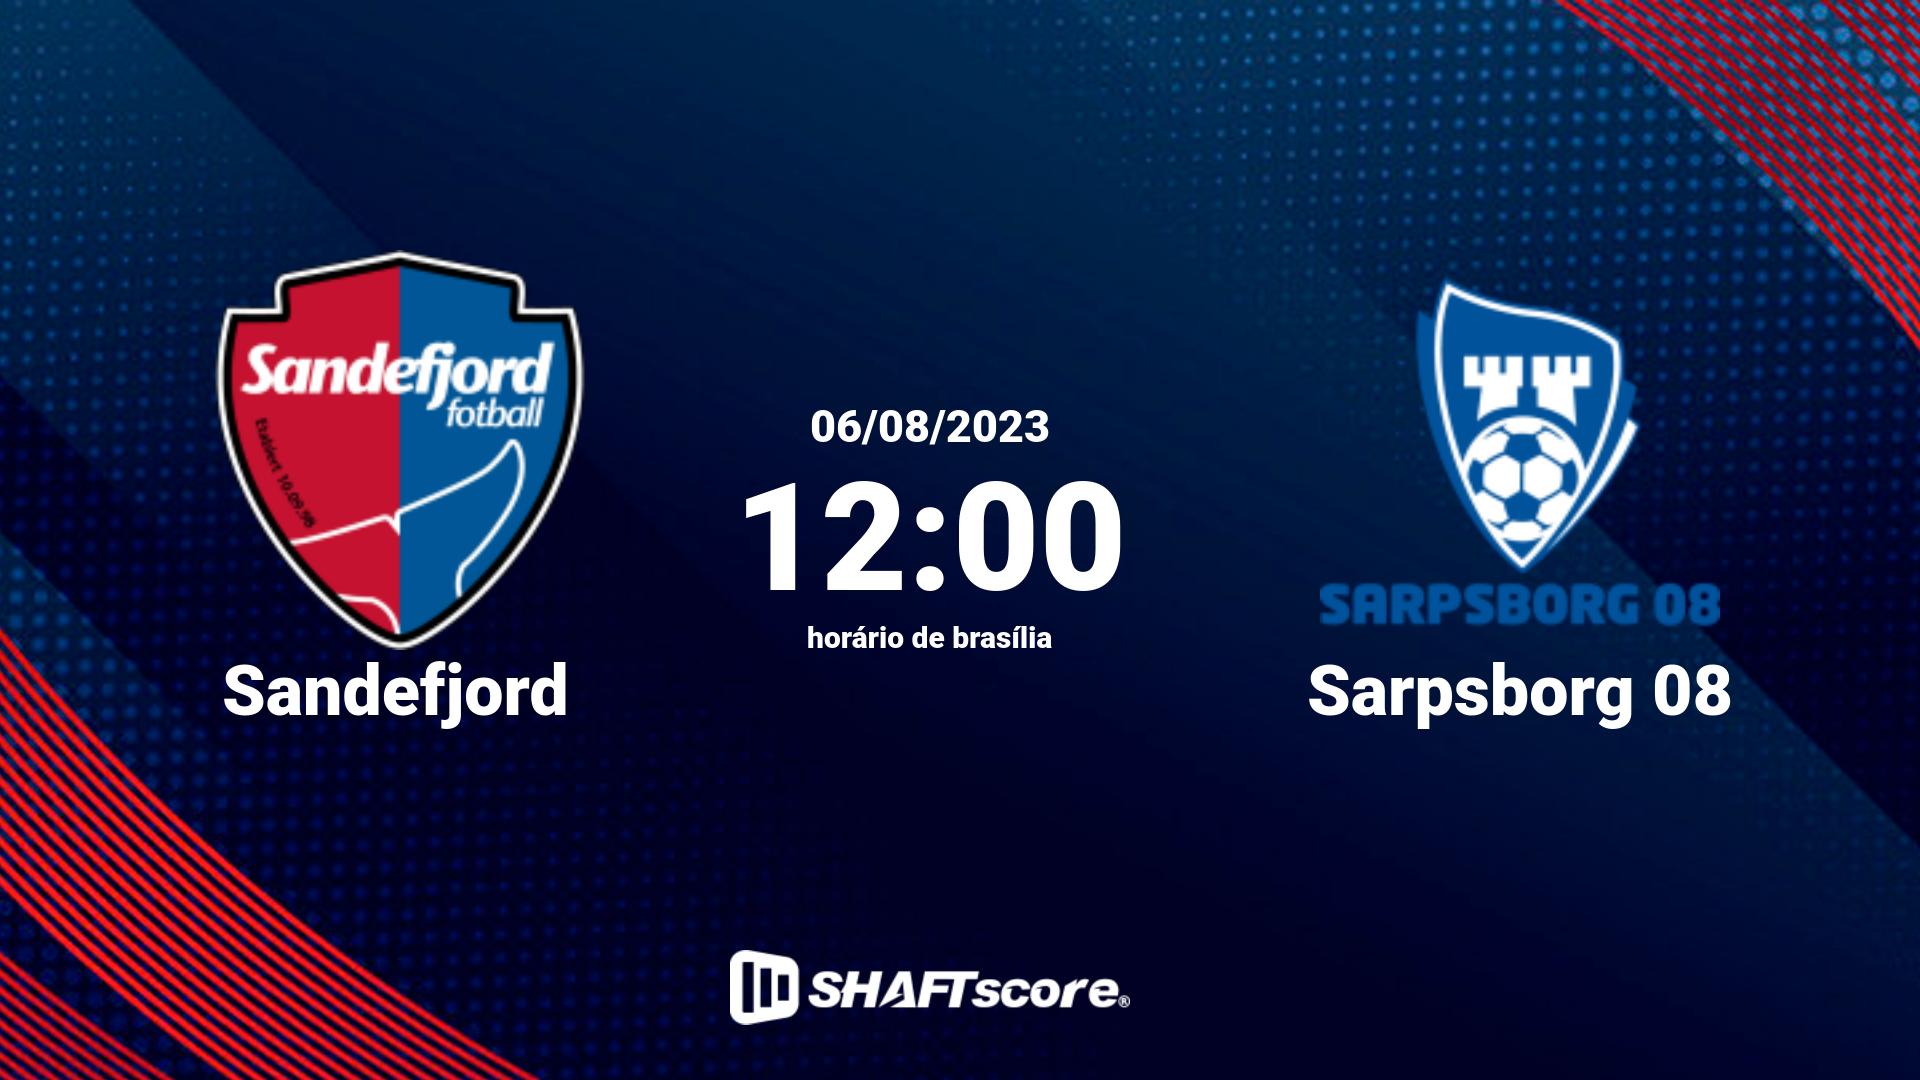 Estatísticas do jogo Sandefjord vs Sarpsborg 08 06.08 12:00